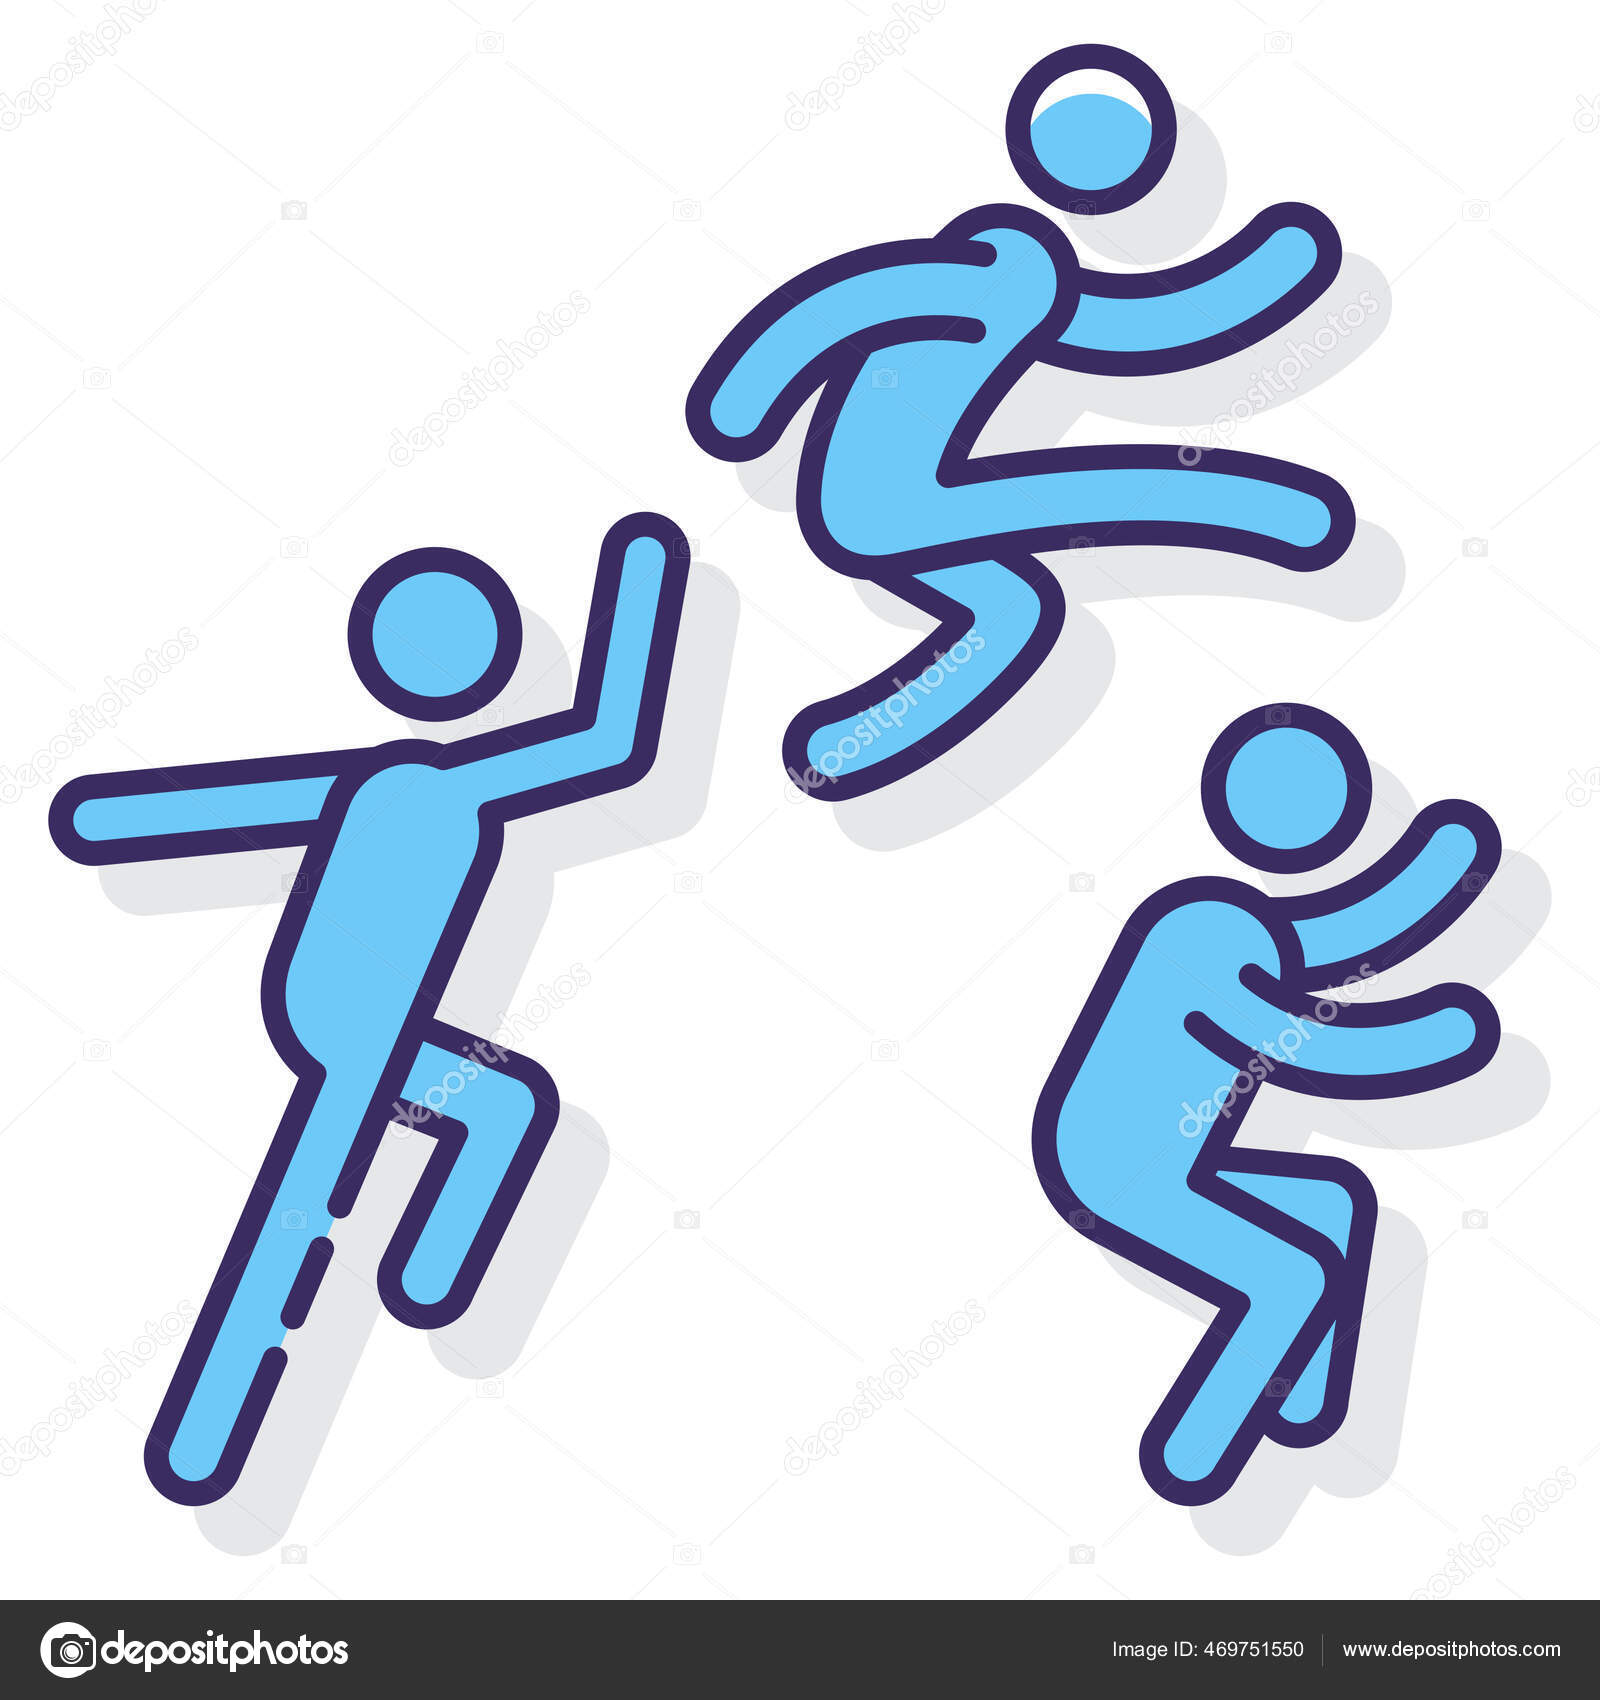 Man, position, yoga, stickman, stick figure icon - Download on Iconfinder